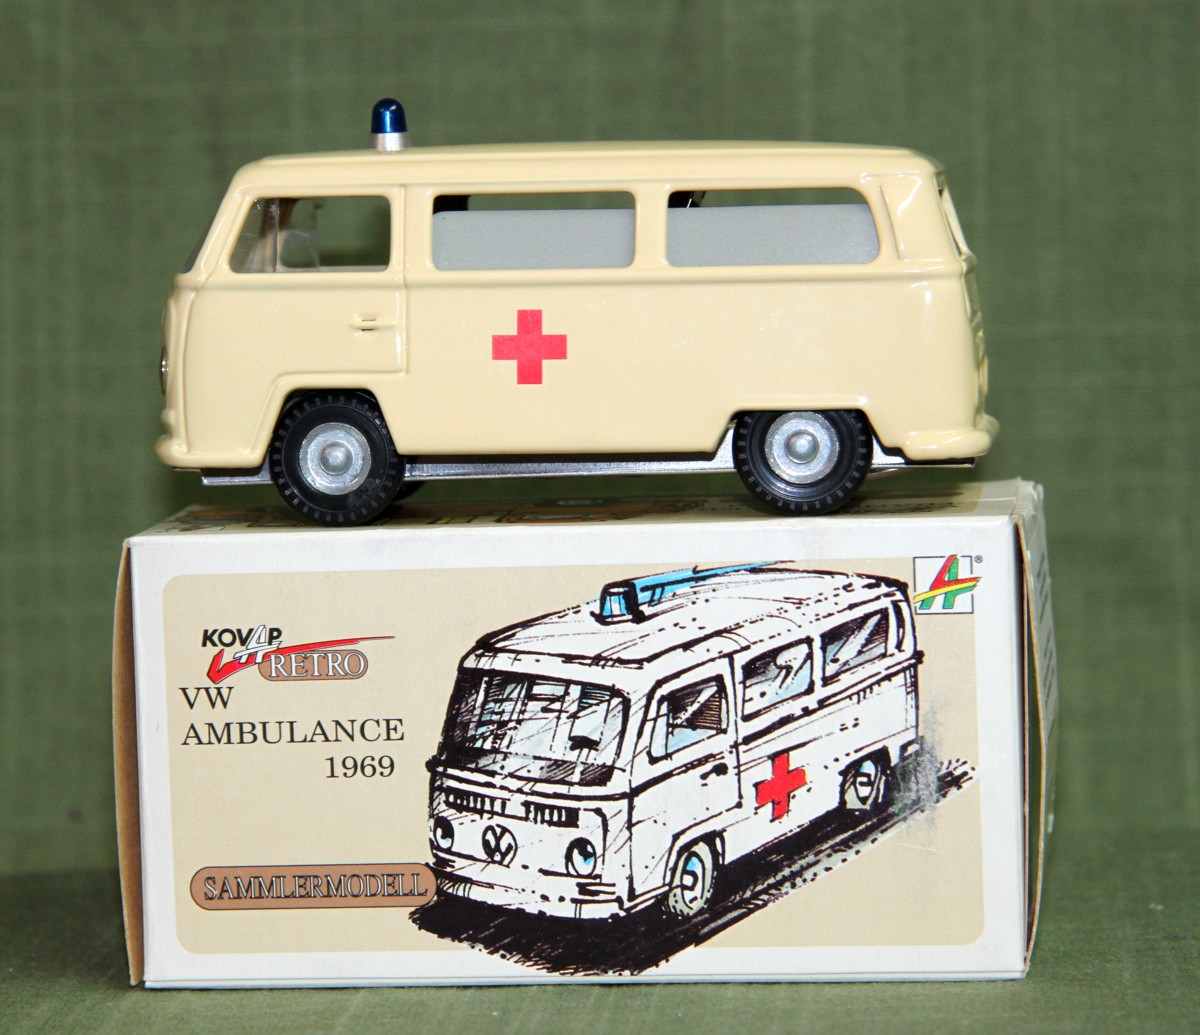 VW Bus Ambulance 1969 from KOVAP.